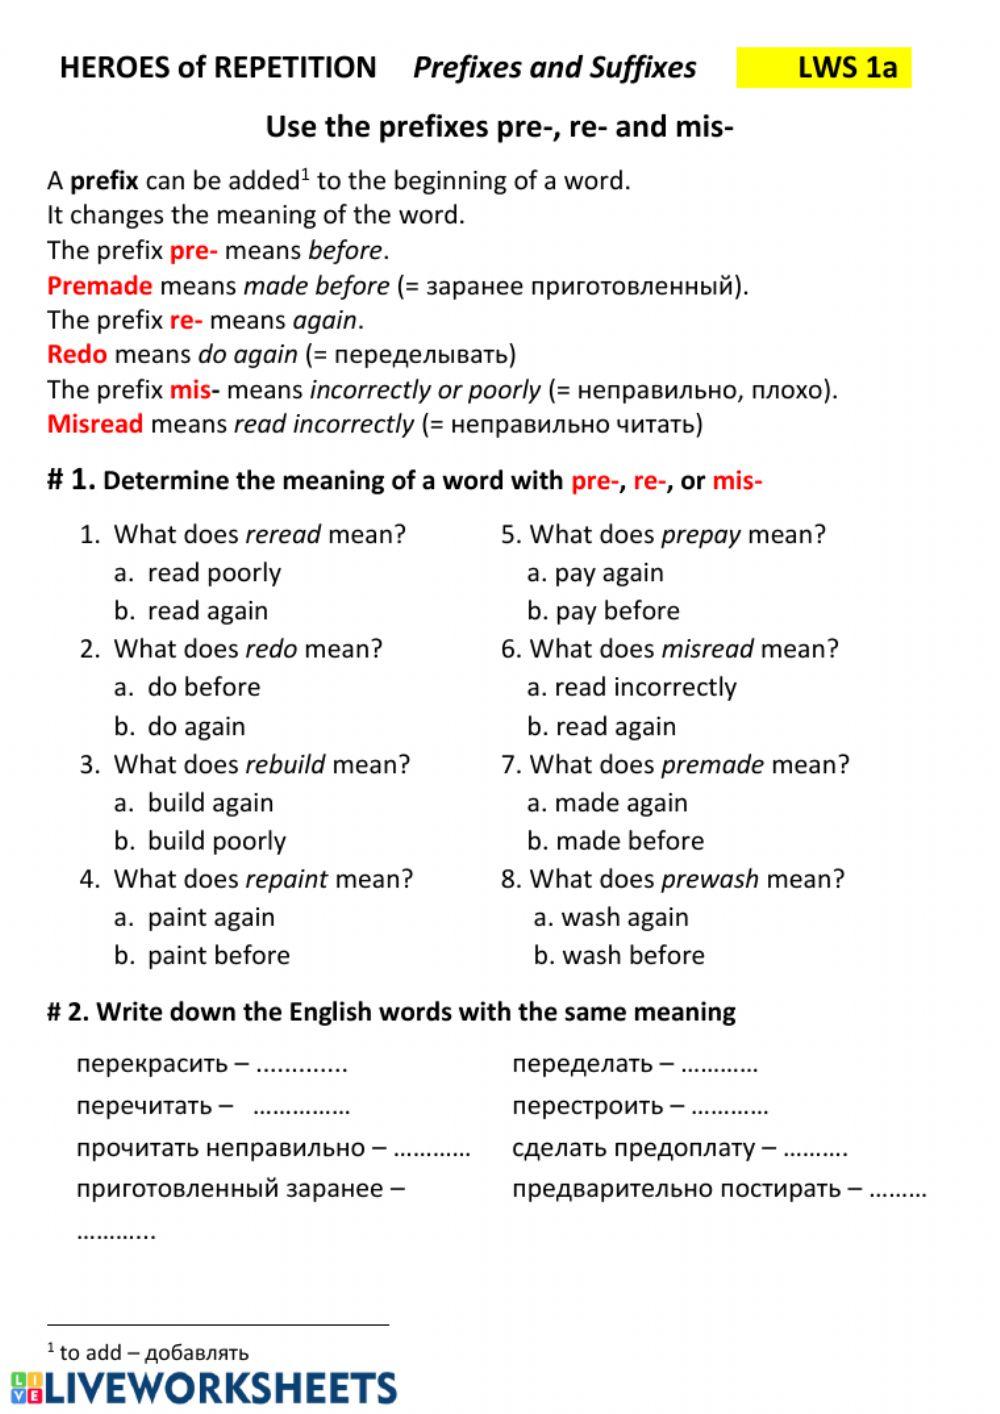 Prefixes and Suffixes LWS 1a